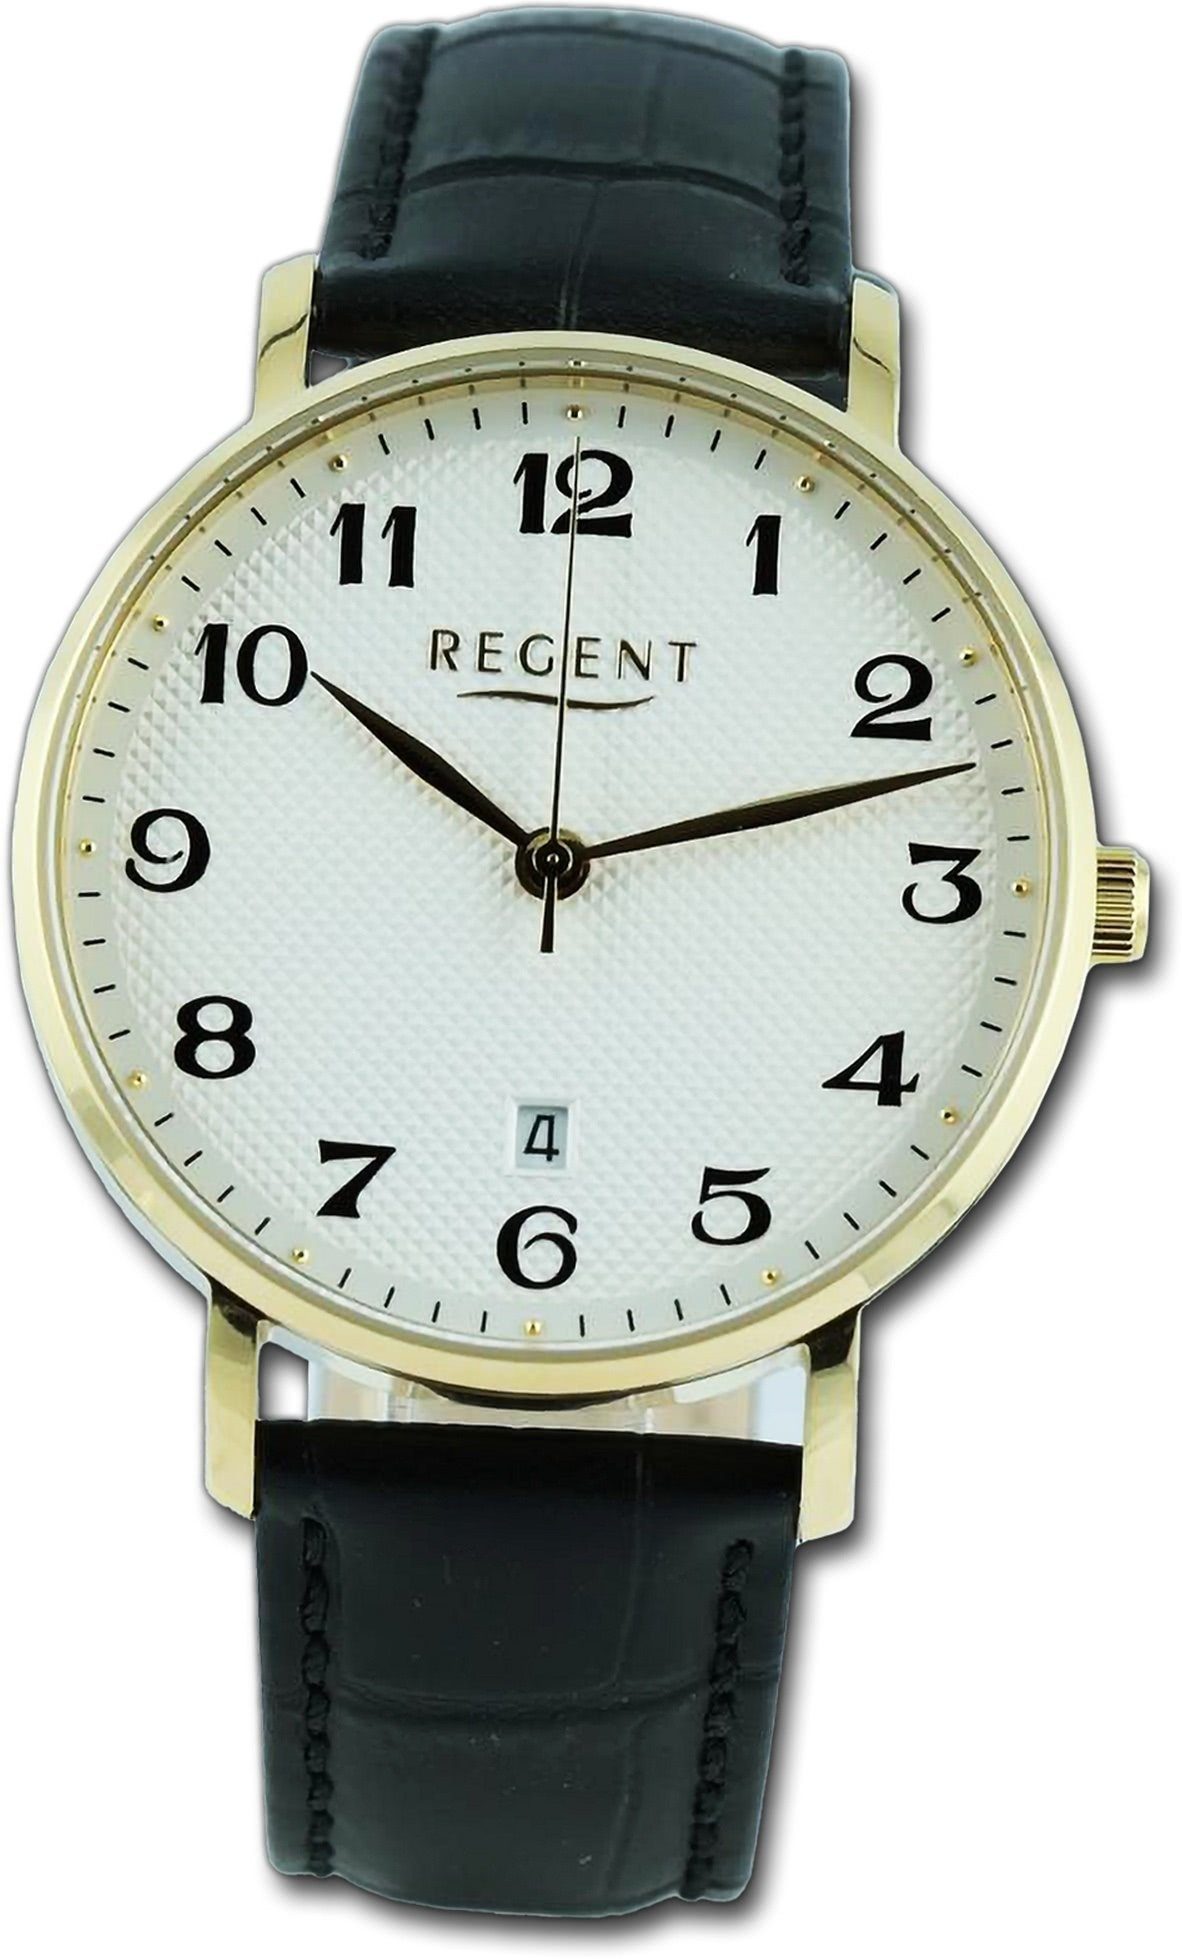 groß Lederarmband (ca. rundes Armbanduhr Regent Regent extra Gehäuse, Herren 39mm) schwarz, Analog, Herrenuhr Quarzuhr